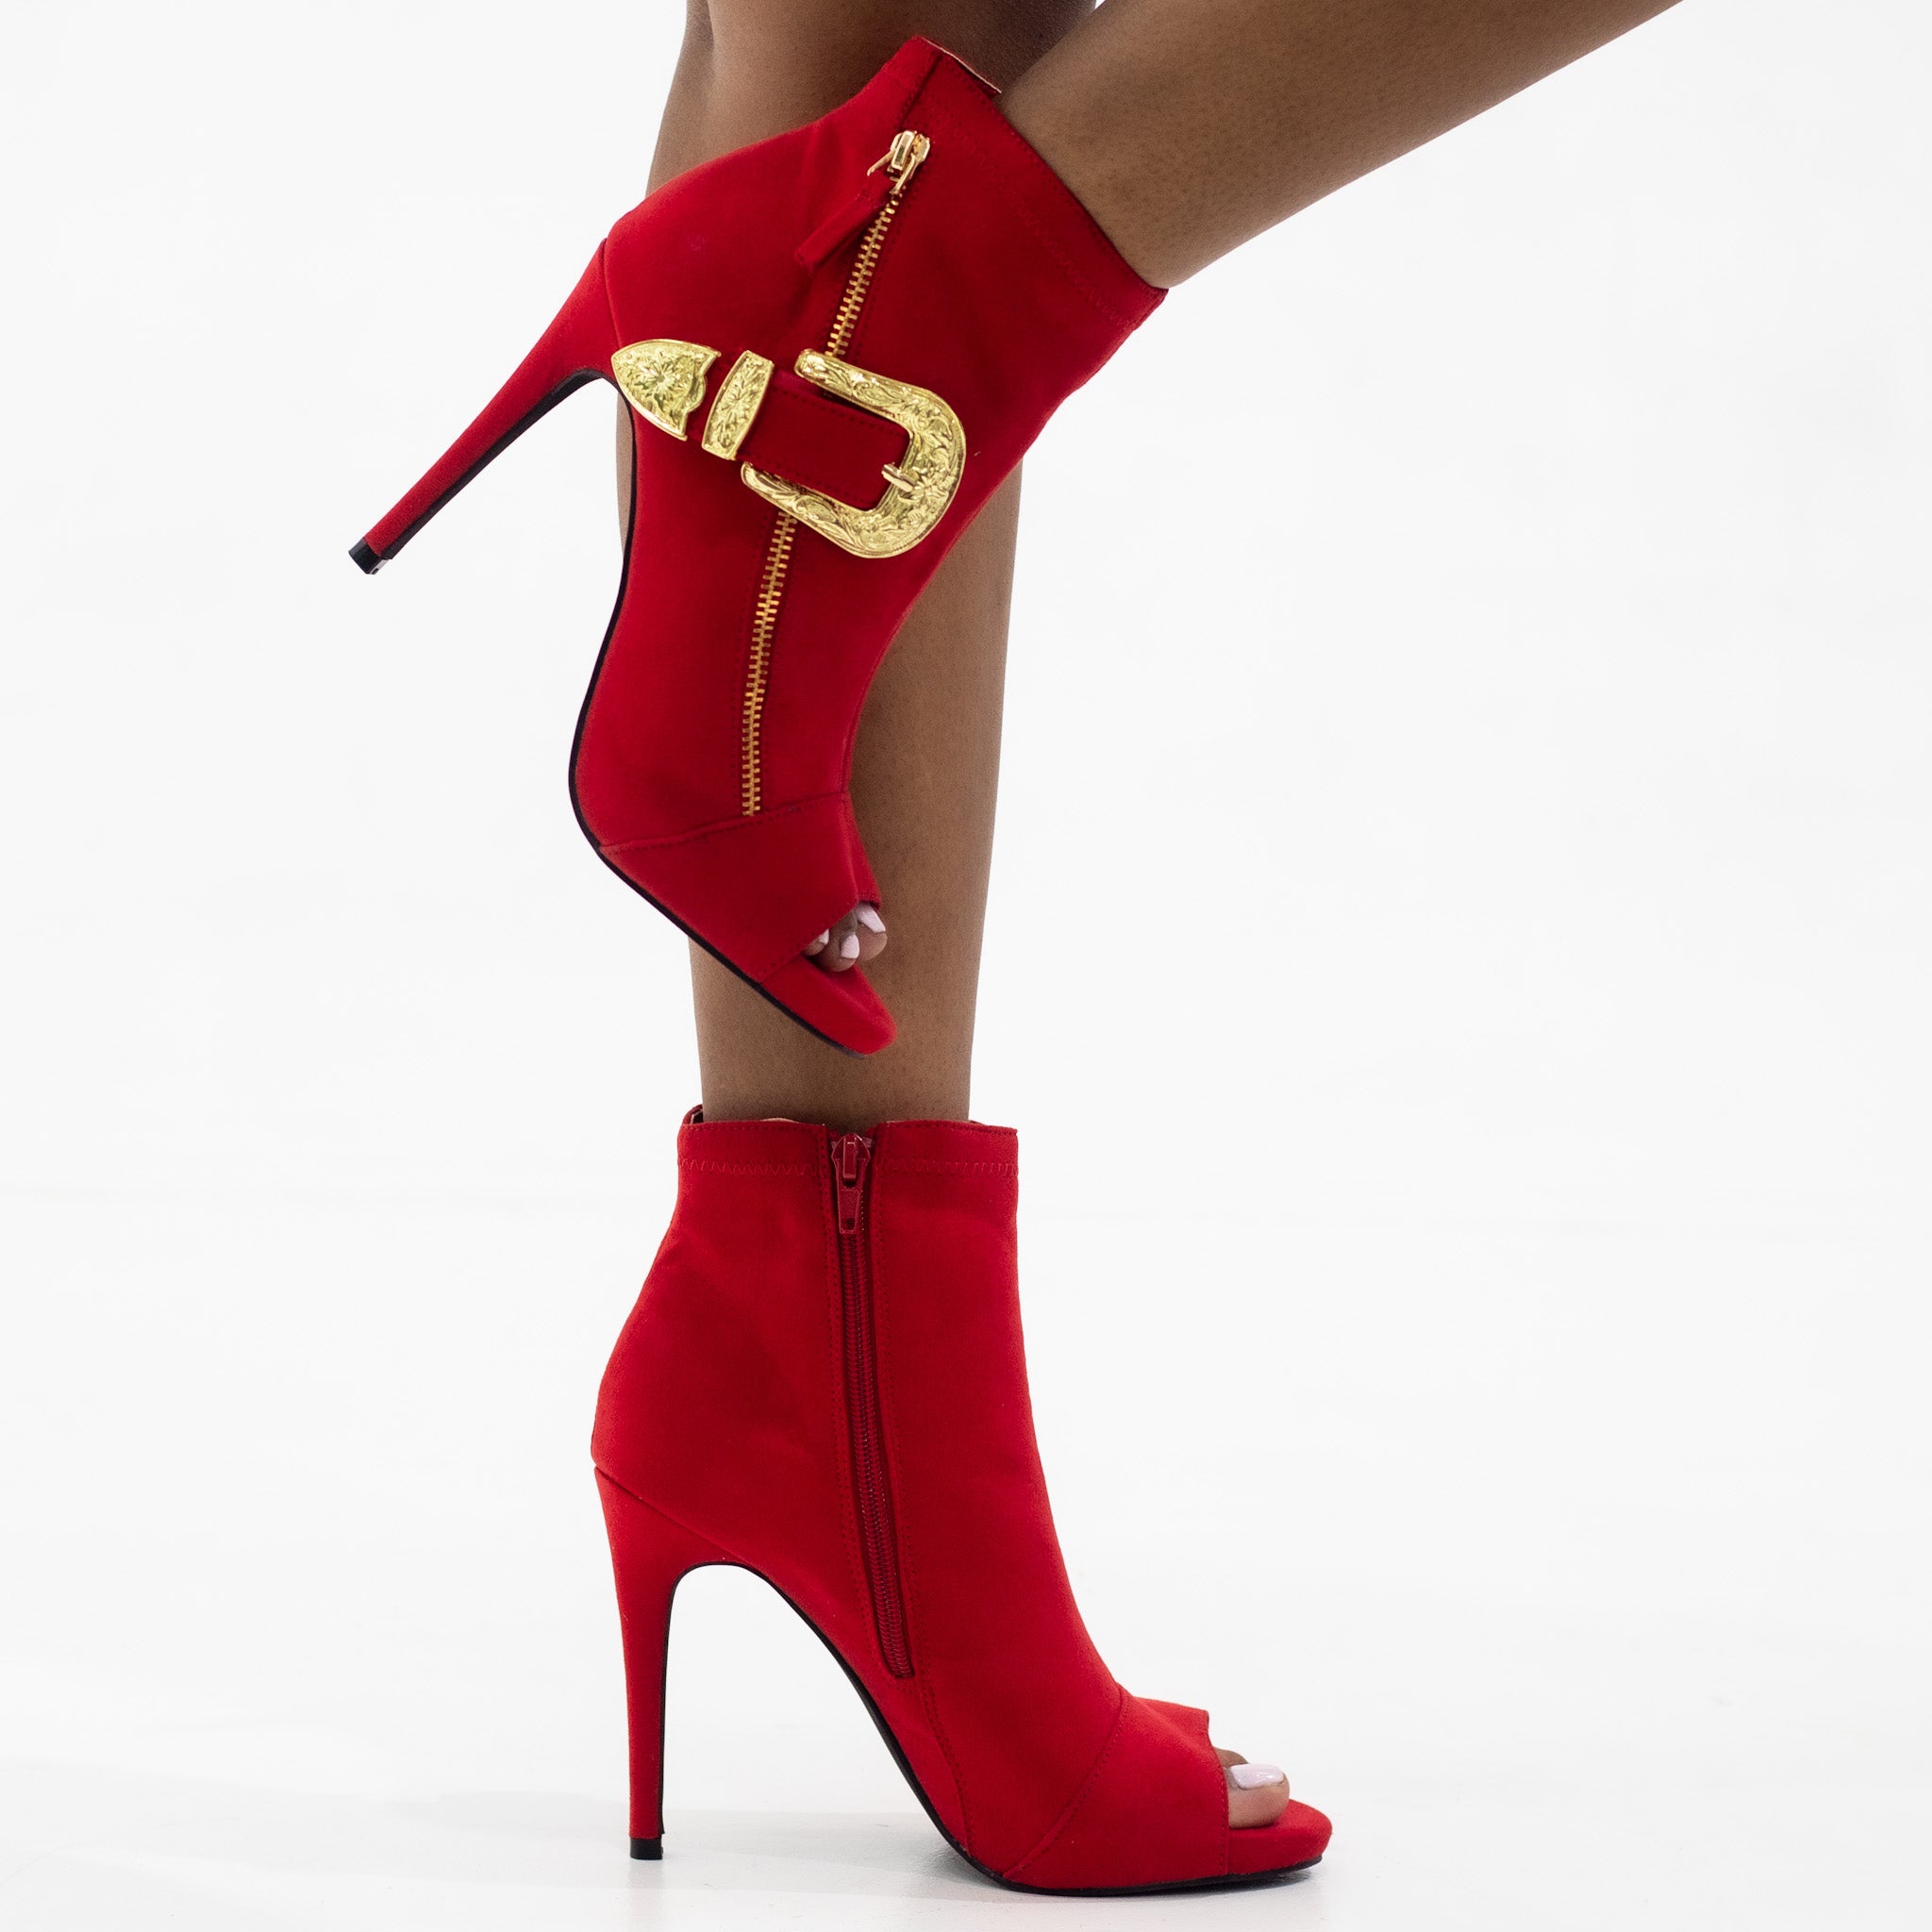 Ugra micro fiber 11cm high heel open toe ankle boot red